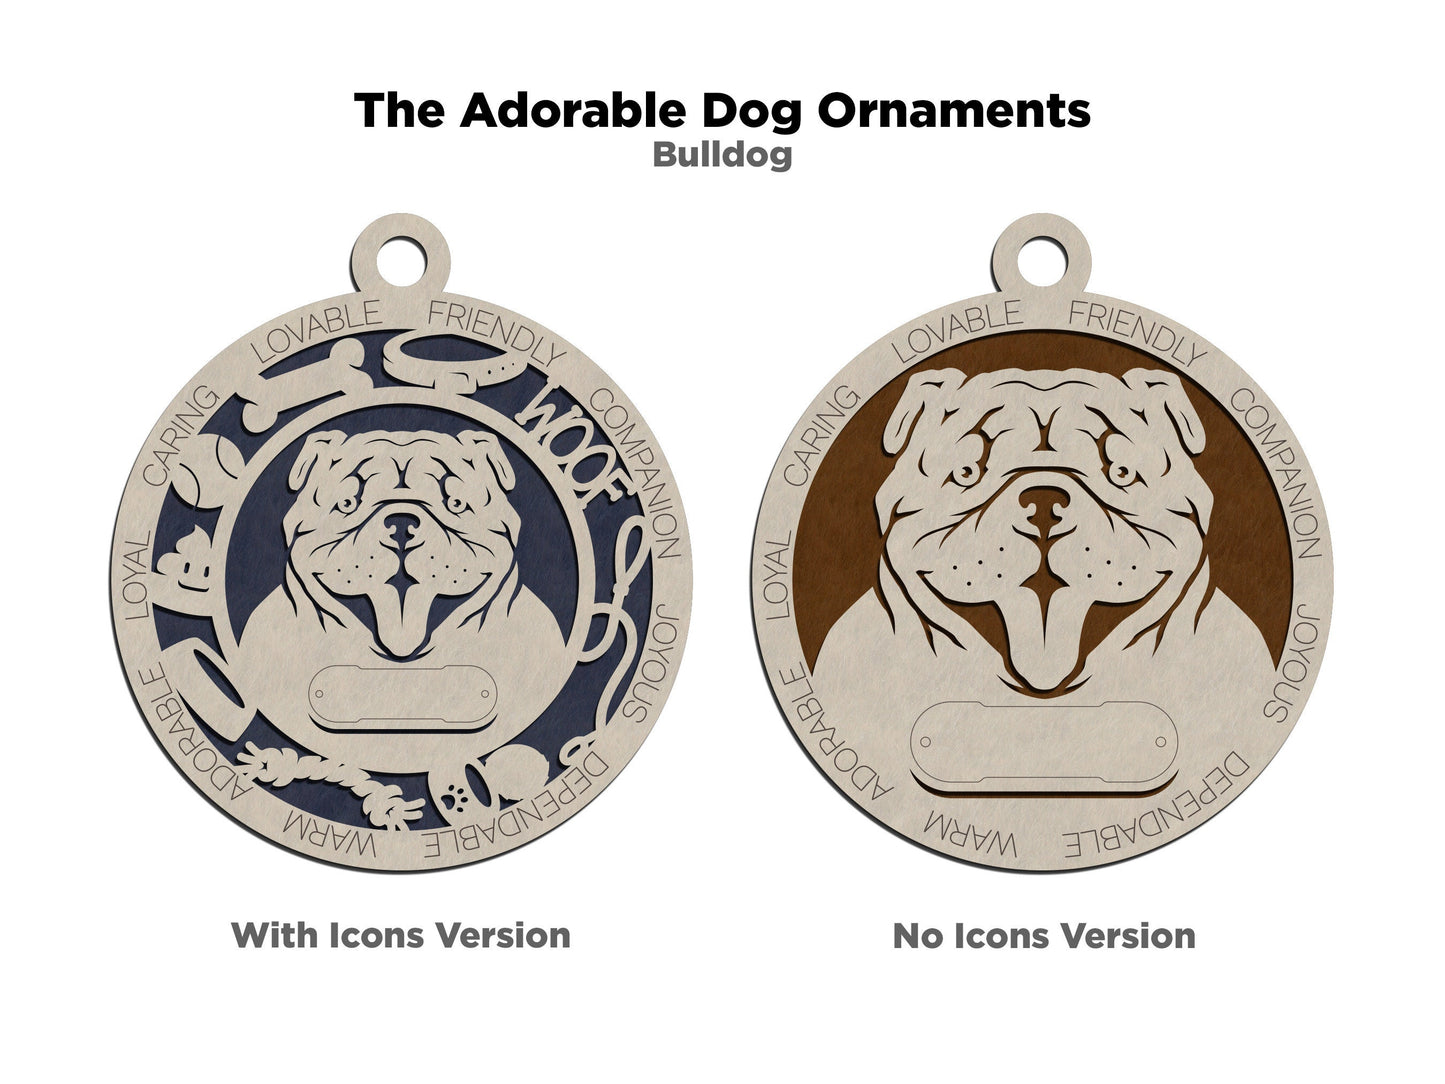 Bulldog - Adorable Dog Ornaments - 2 Ornaments included - SVG, PDF, AI File Download - Sized for Glowforge